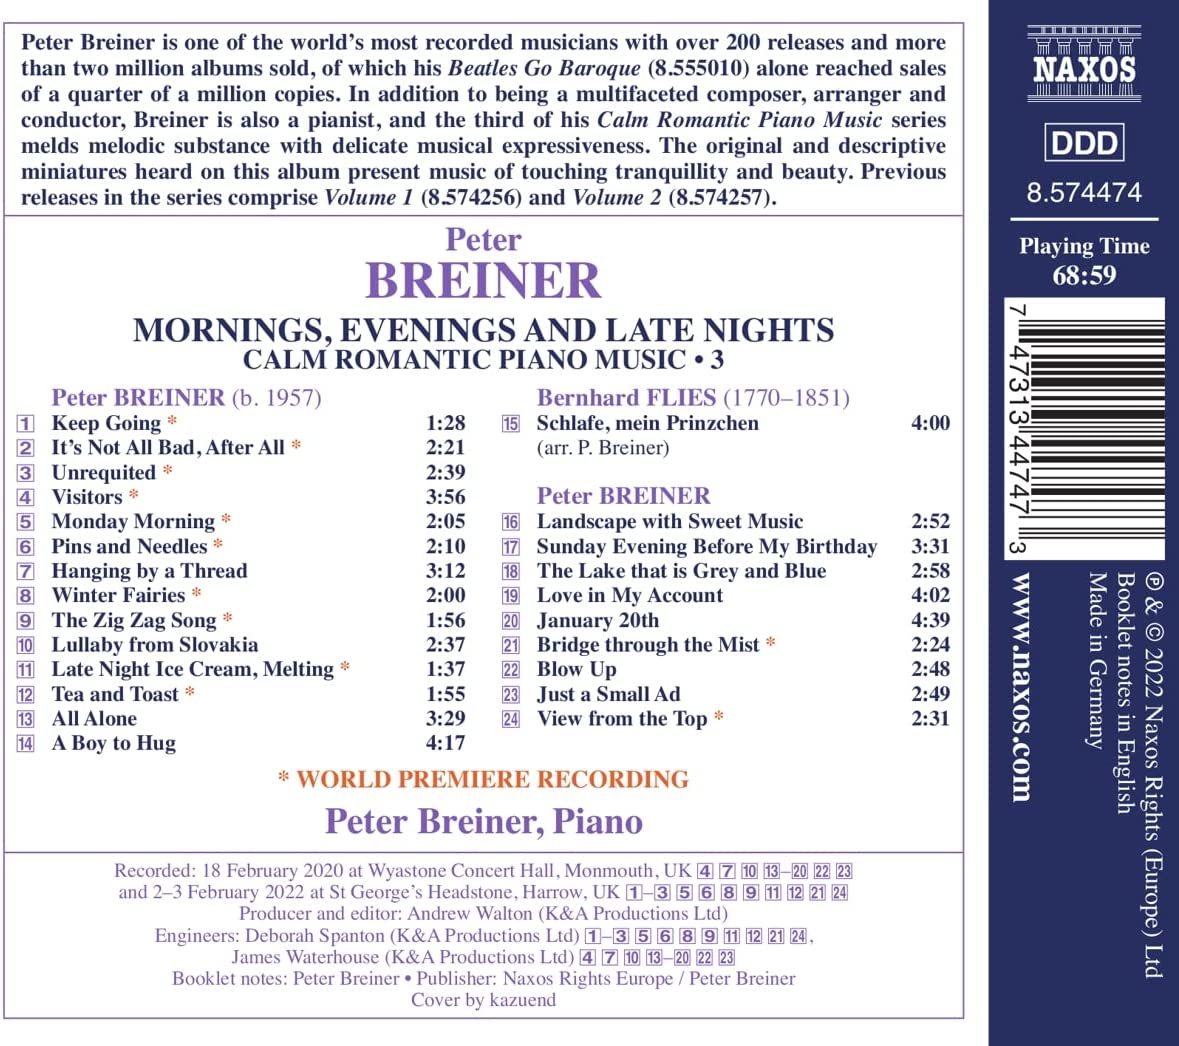 Peter Breiner 아침, 저녁 그리고 늦밤 - 잔잔하고 로맨틱한 피아노 음악 작품 시리즈 3집 (Peter Breiner: Mornings, Evenings and Late Nights - Calm Romantic Piano Music, Vol. 3)